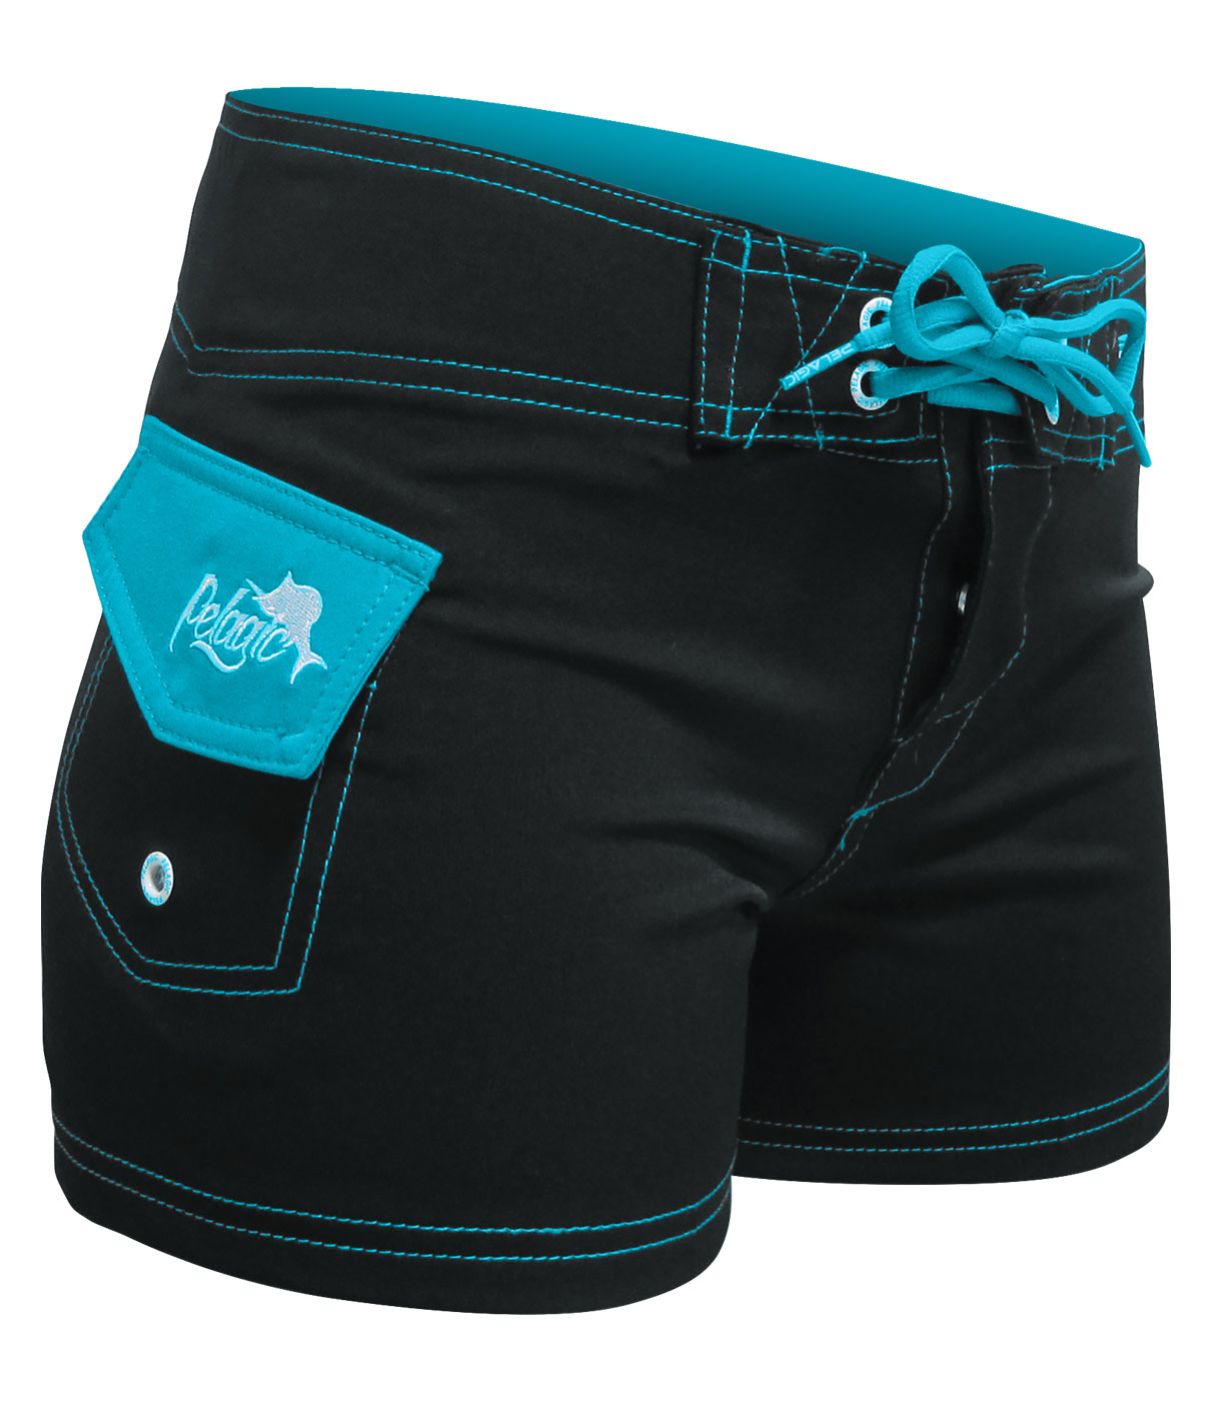 board shorts for women product alternate view #1 OSJGUZM